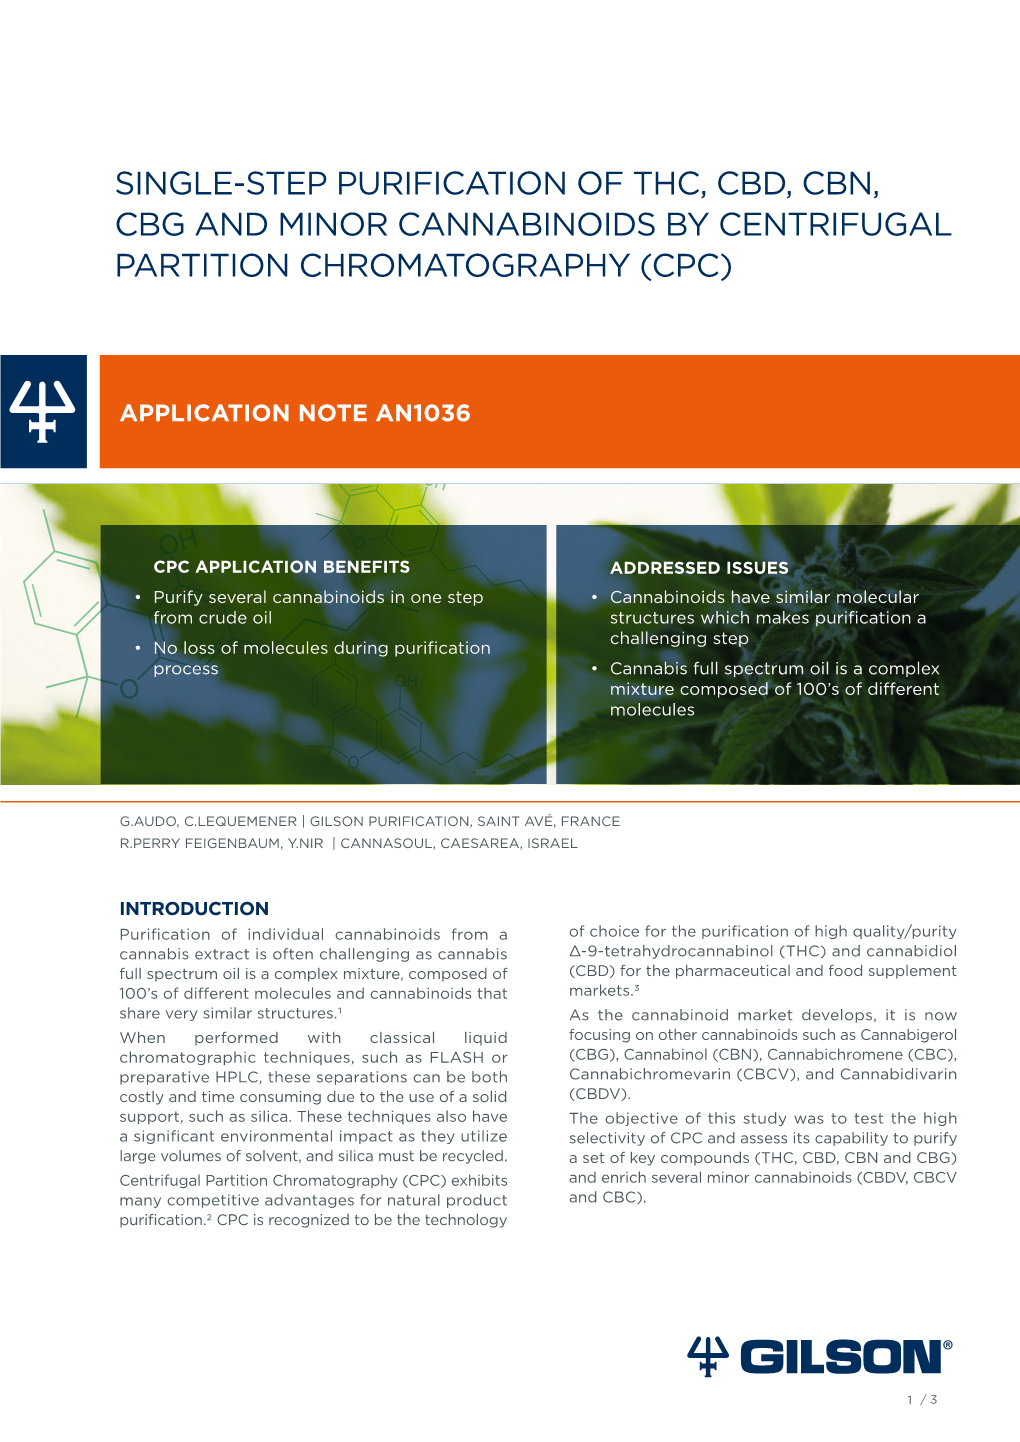 Single-Step Purification of Thc, Cbd, Cbn, Cbg and Minor Cannabinoids by Centrifugal Partition Chromatography (Cpc)